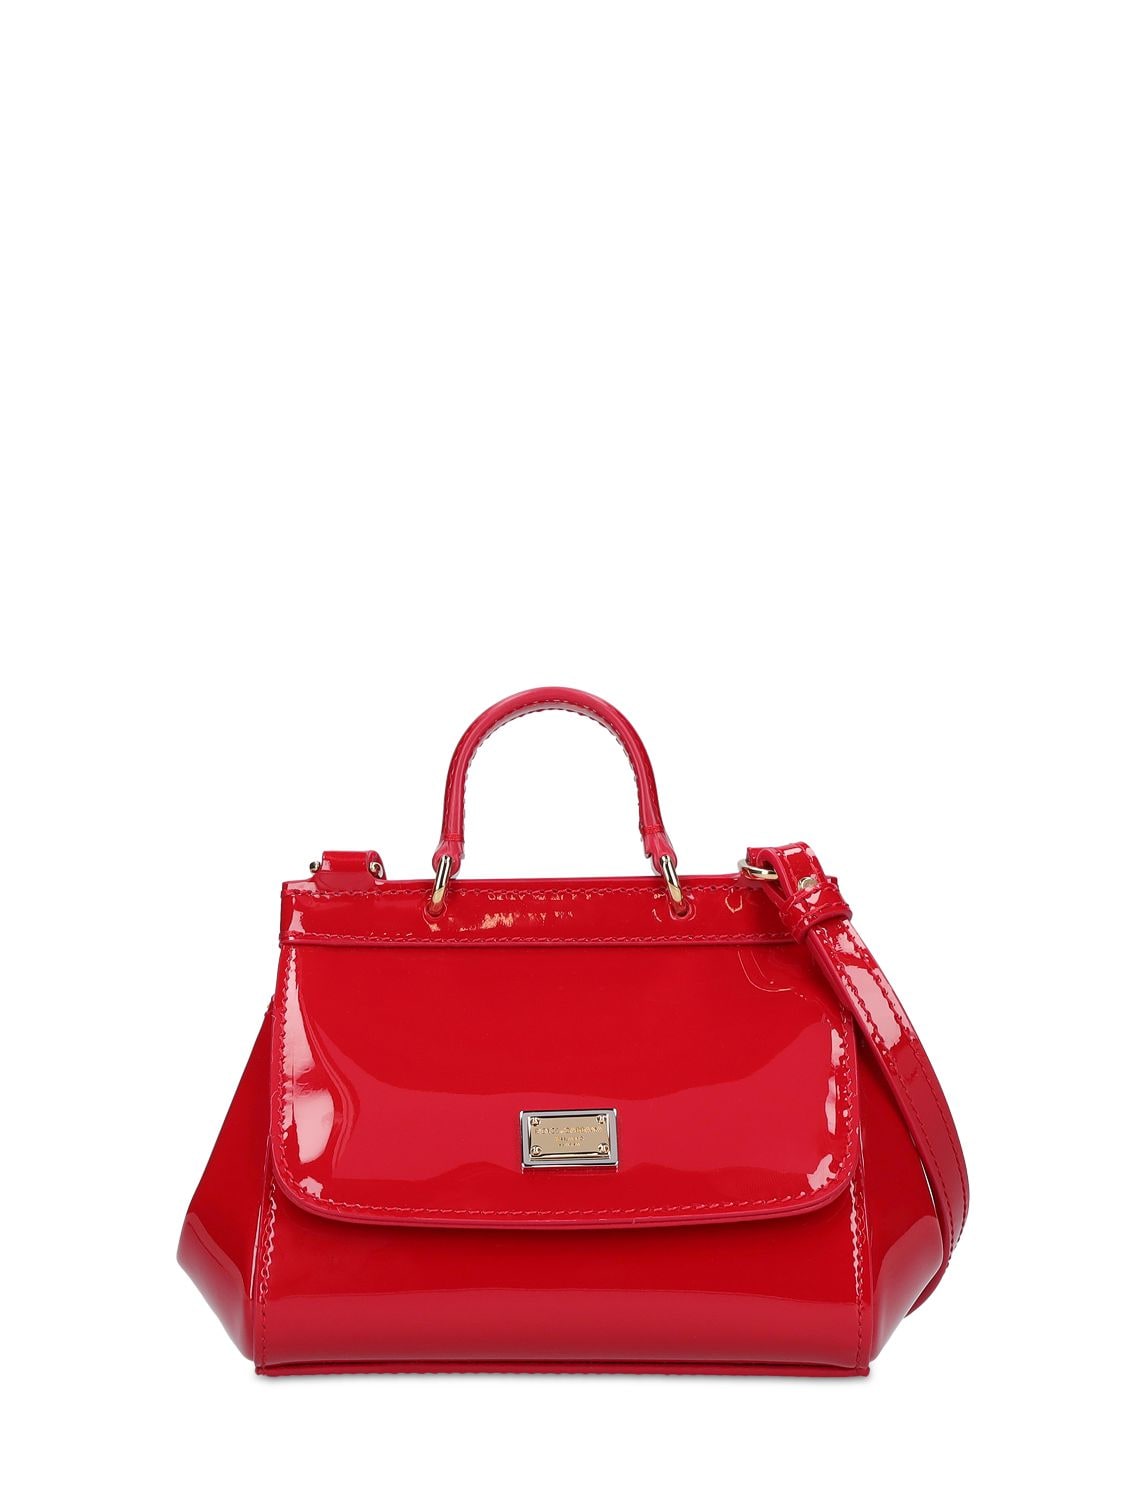 Dolce & Gabbana Kids' Sicily Patent Leather Shoulder Bag In Red